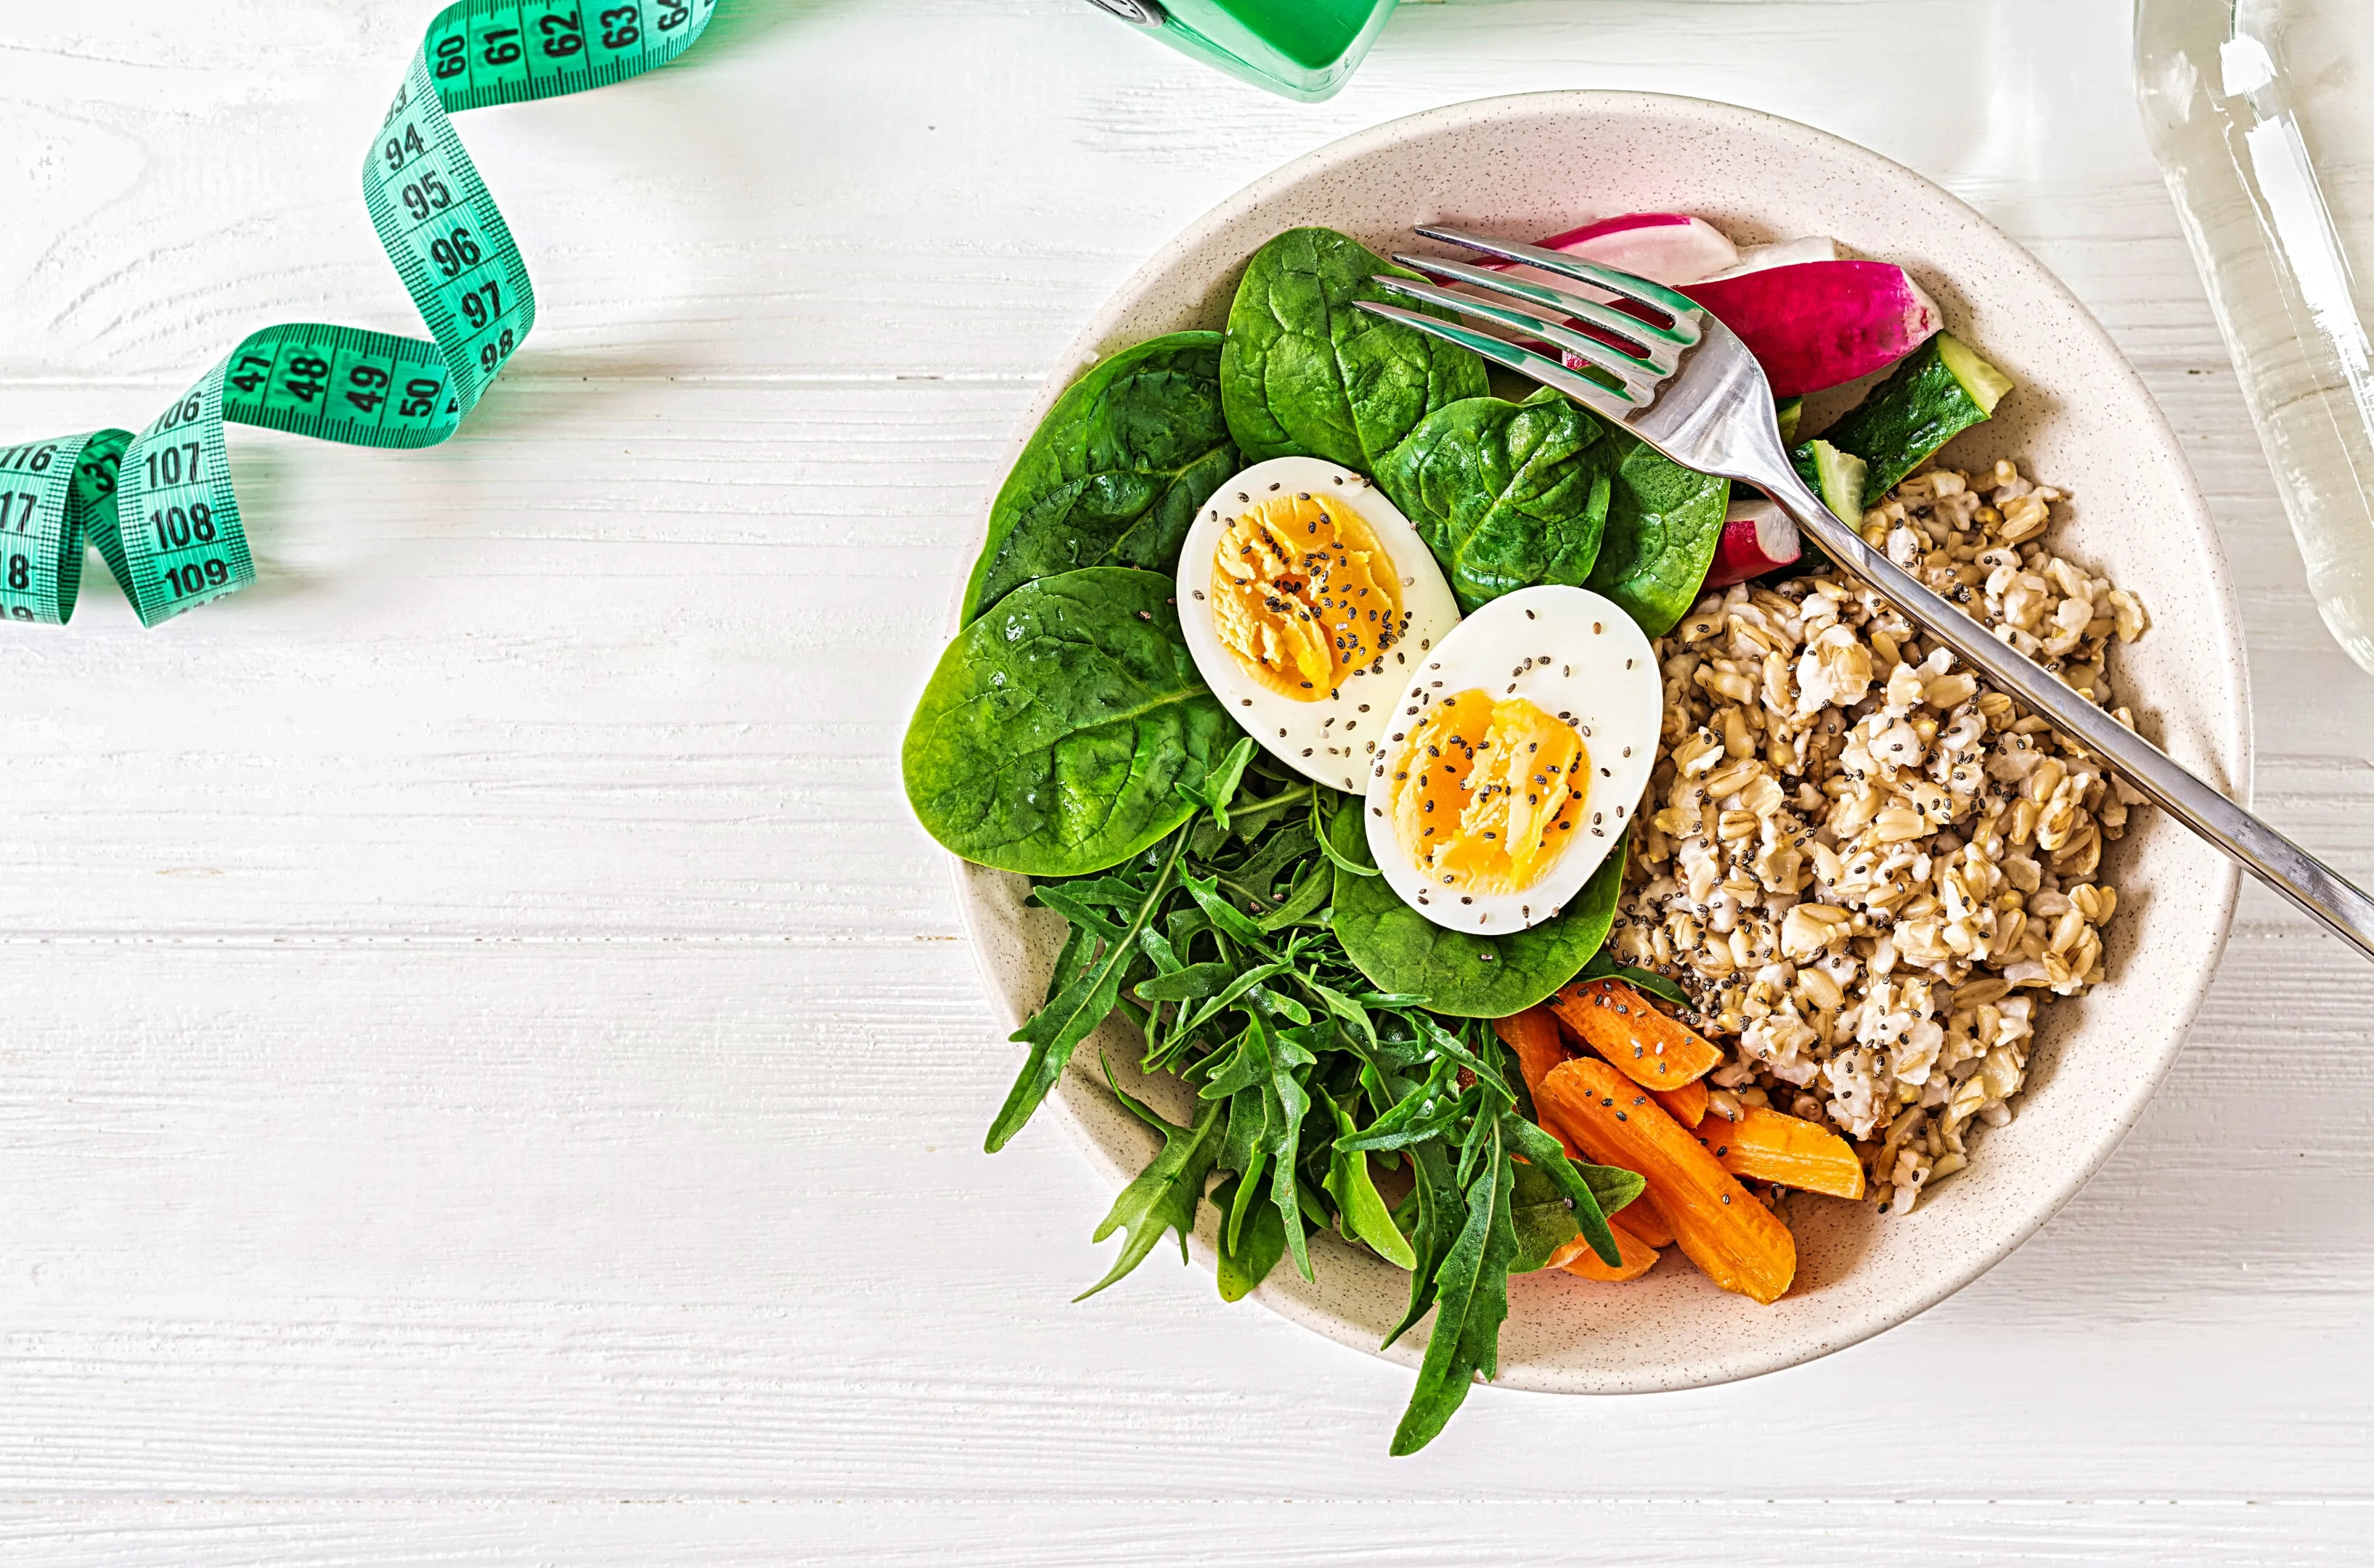 Salad of greens, egg, oats and carrots